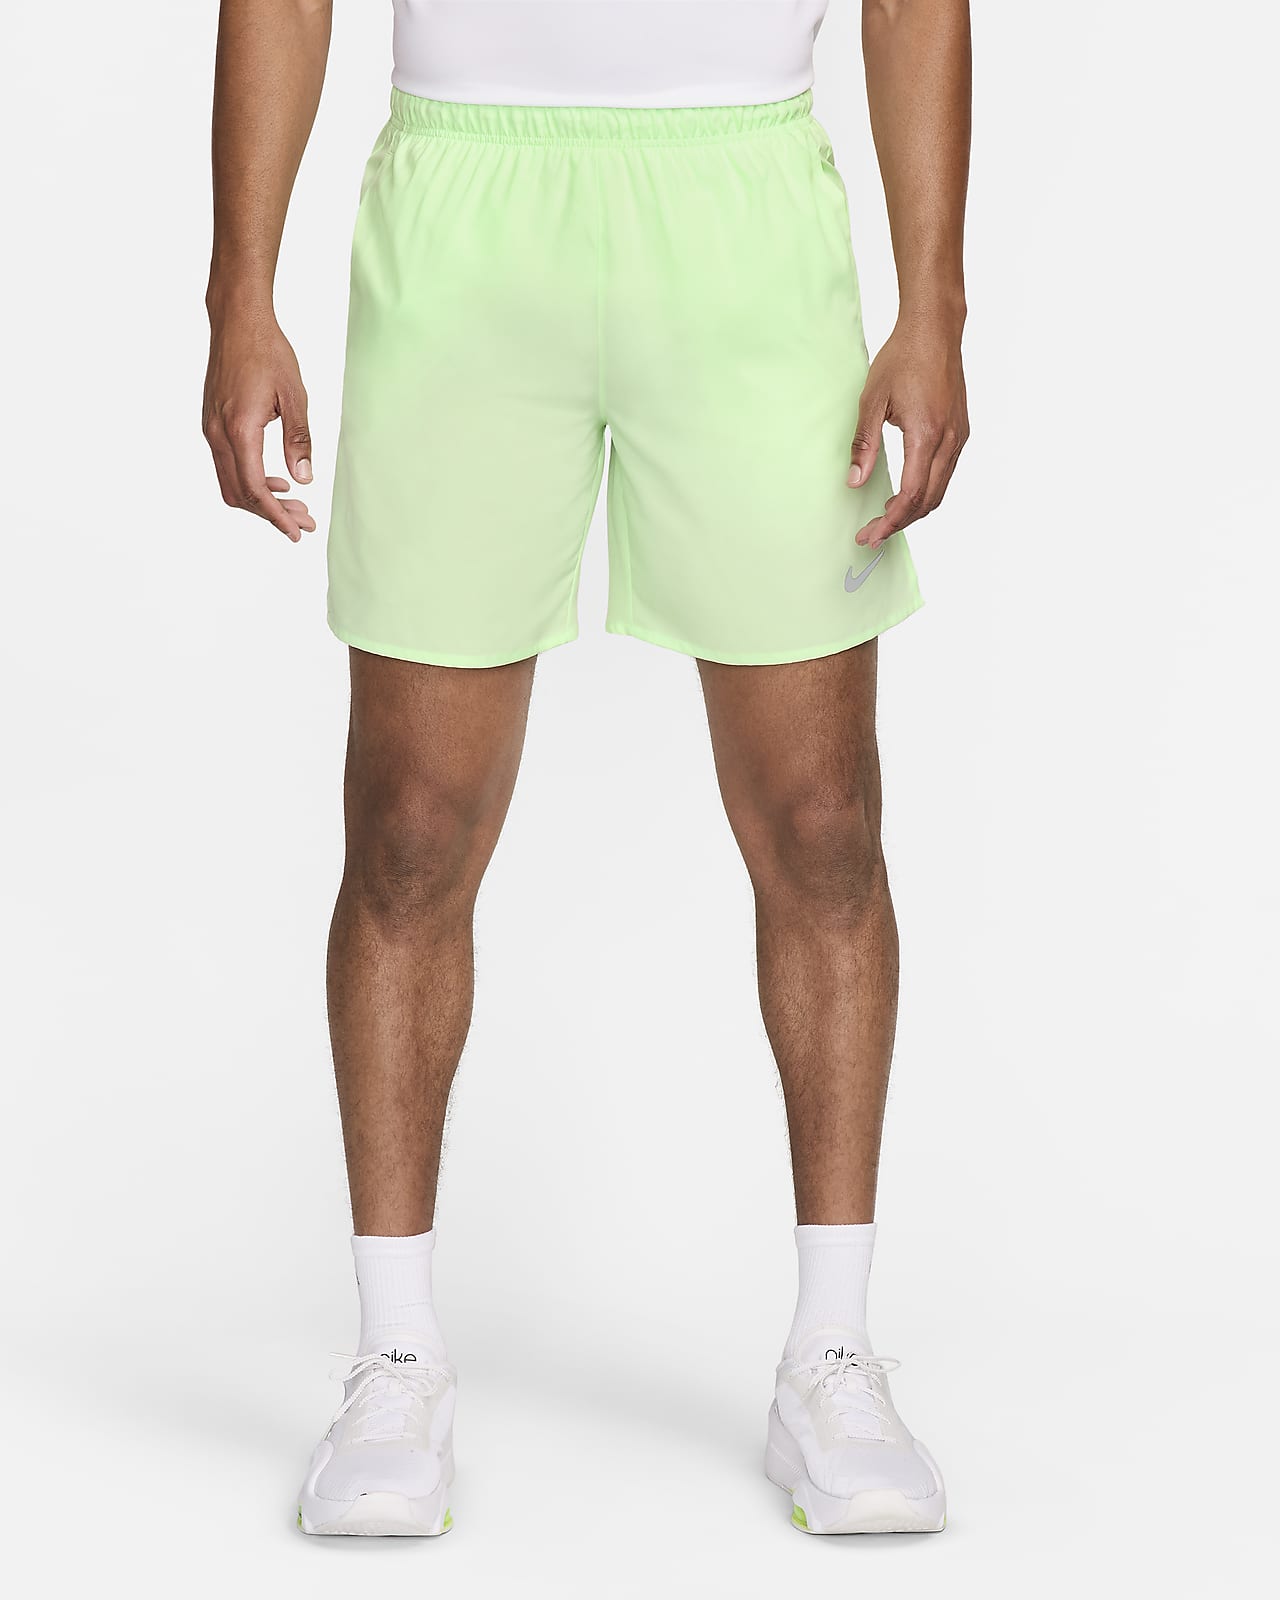 Shorts de running sin forro Dri-FIT de 18 cm para hombre Nike Challenger